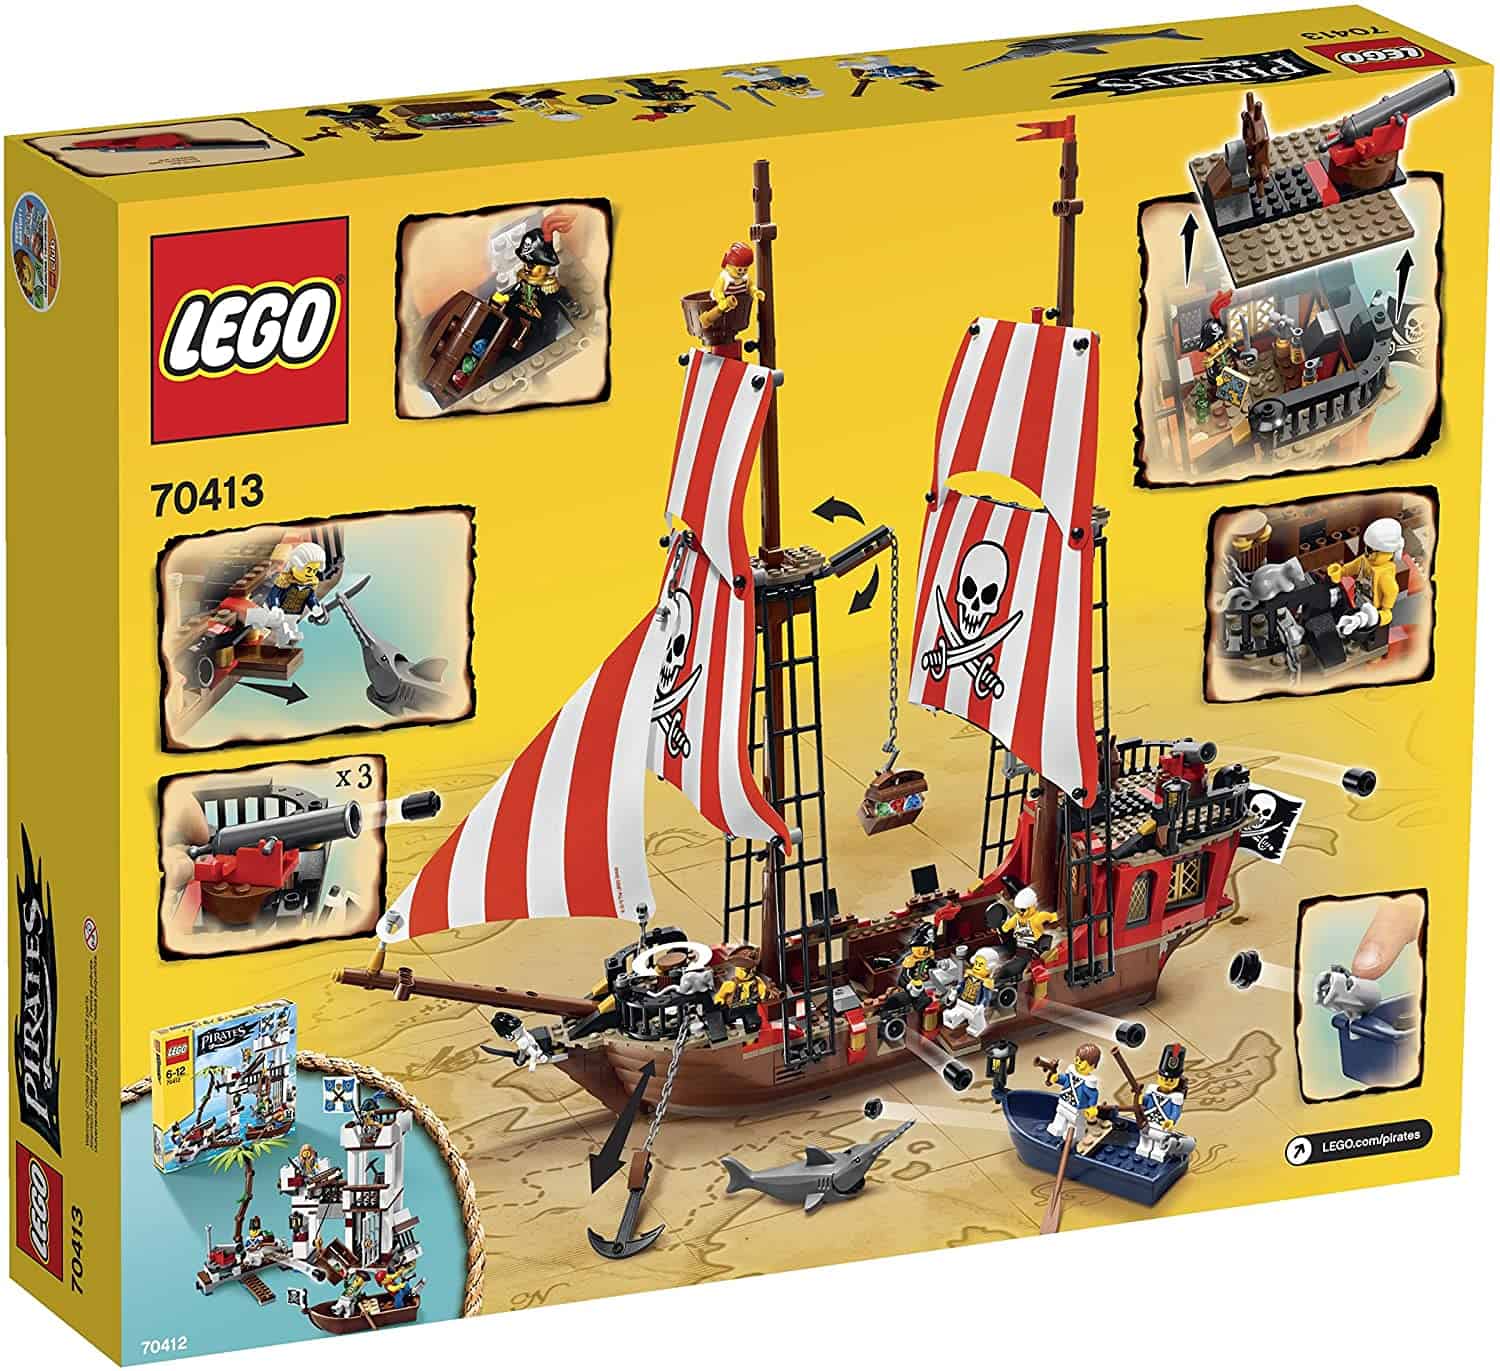 Best LEGO Pirates ship: Pirate ship The Brick Bounty 70413